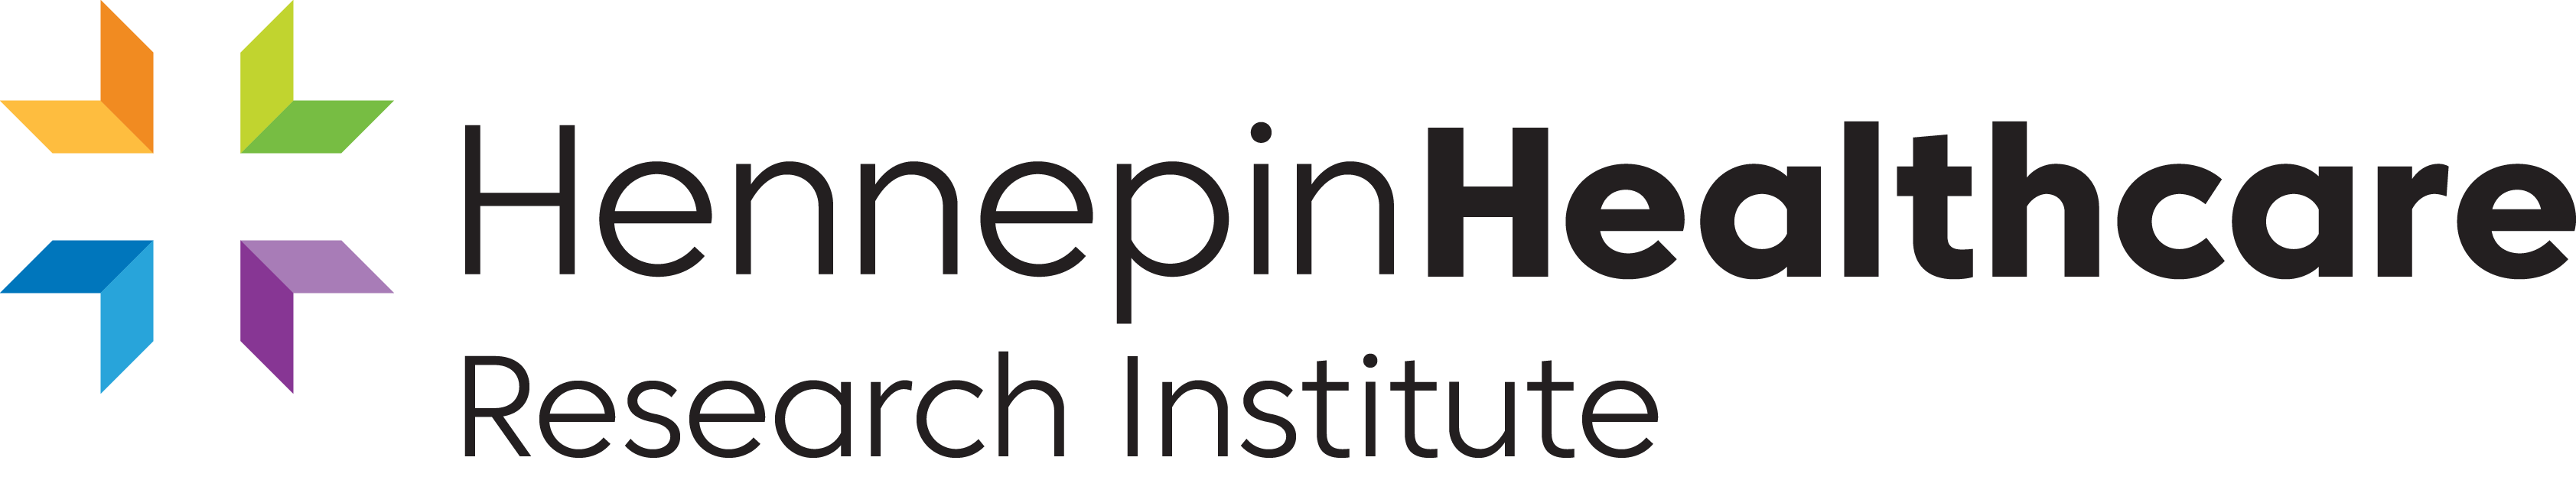 Hennepin Healthcare Research Institute